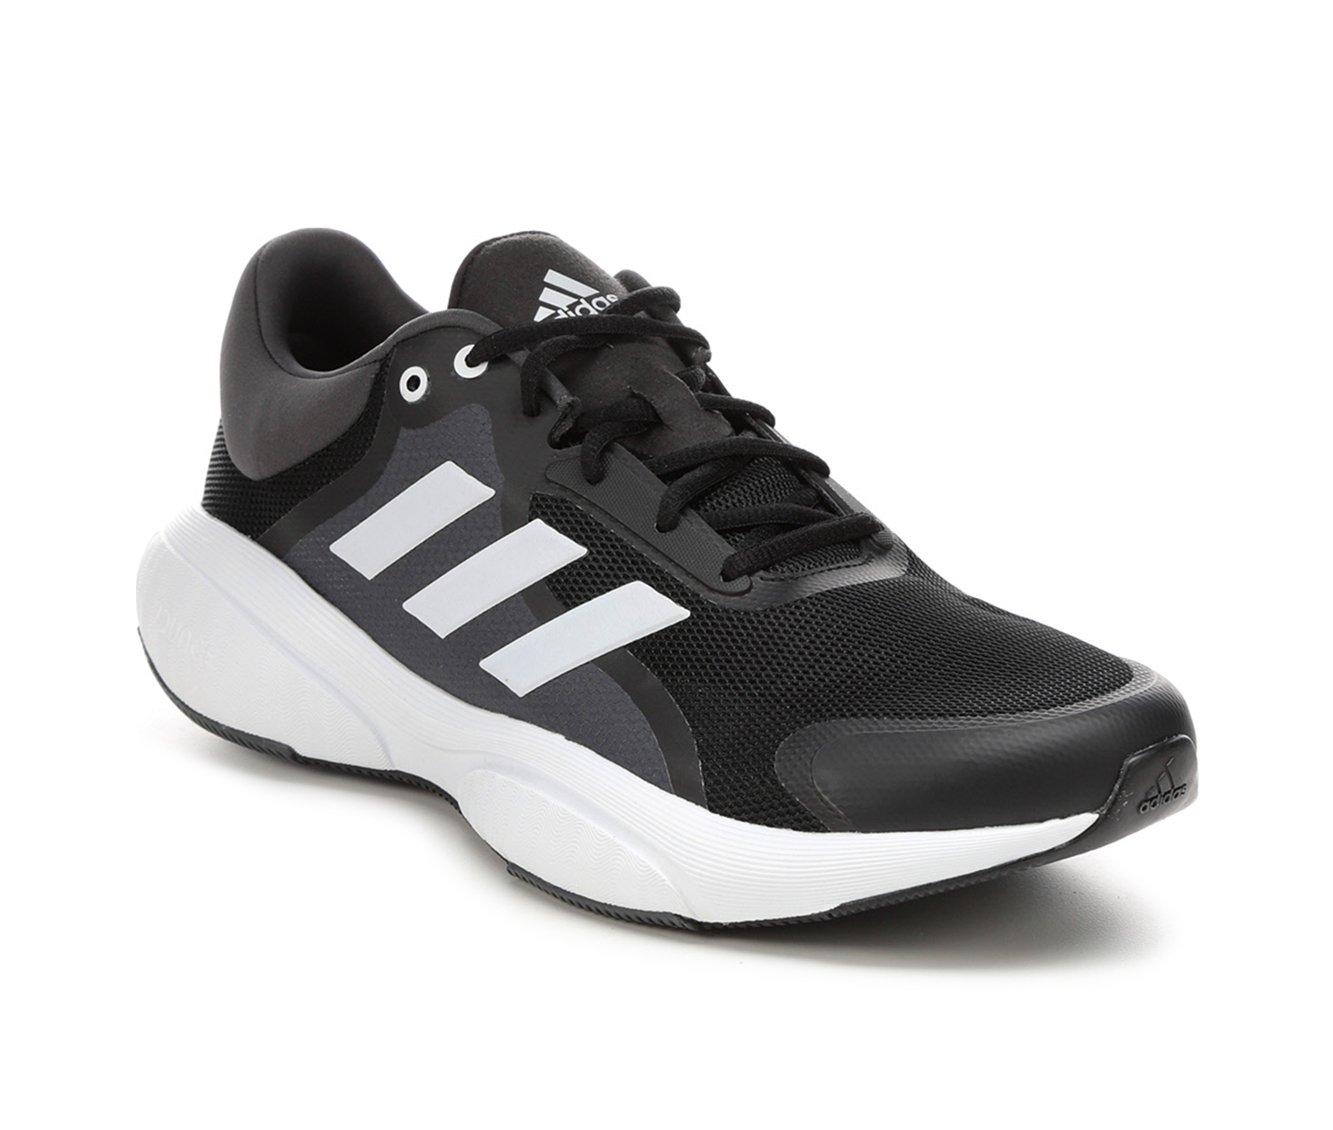 Adidas Response Performance Running Shoes